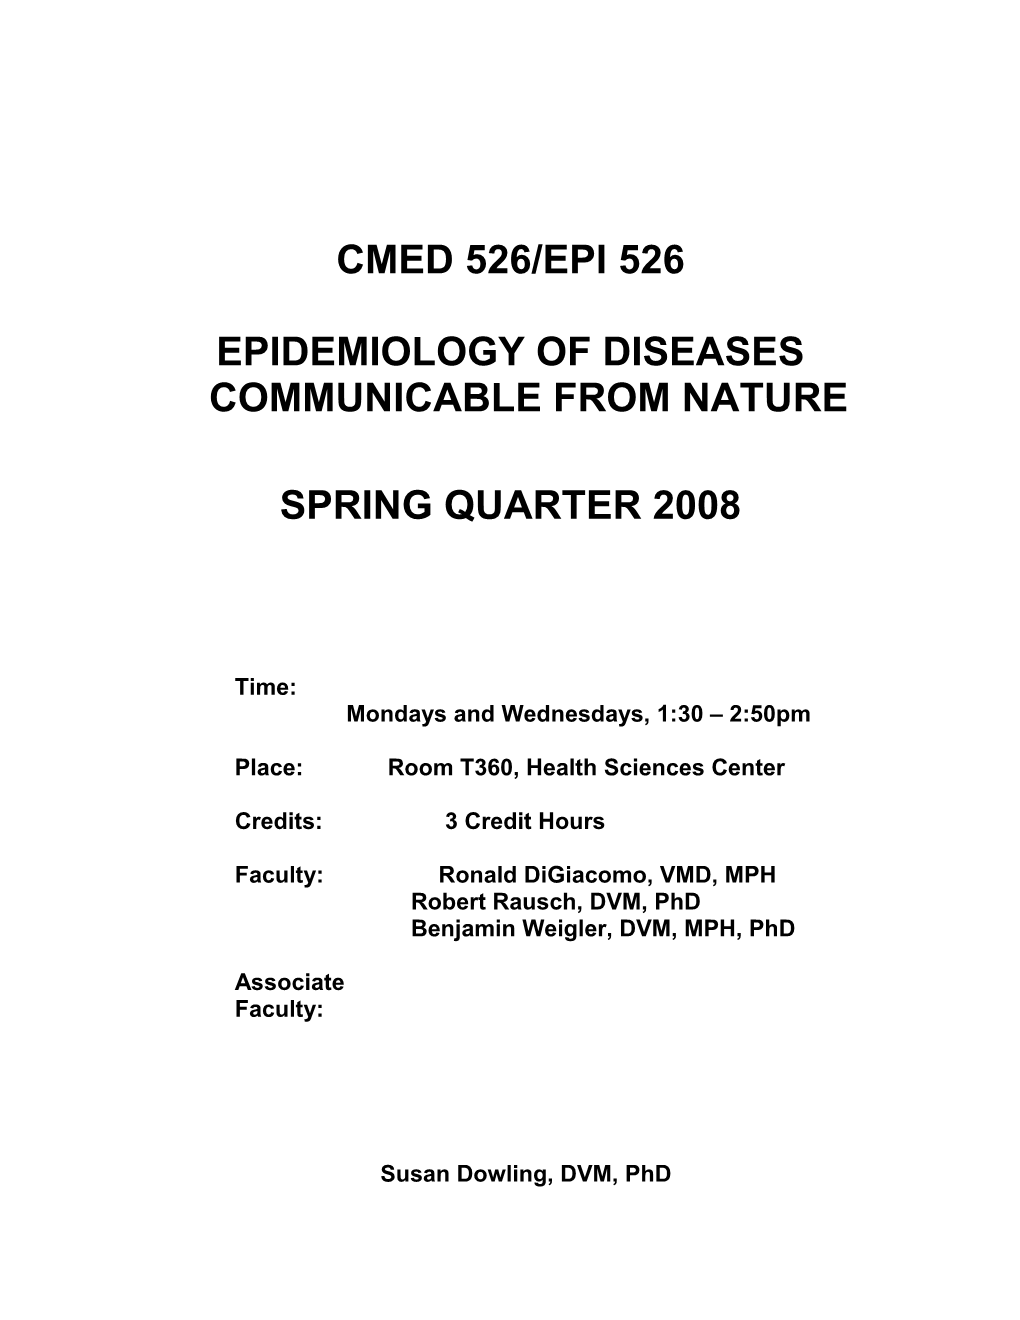 Zoonotic Diseases Spring 199